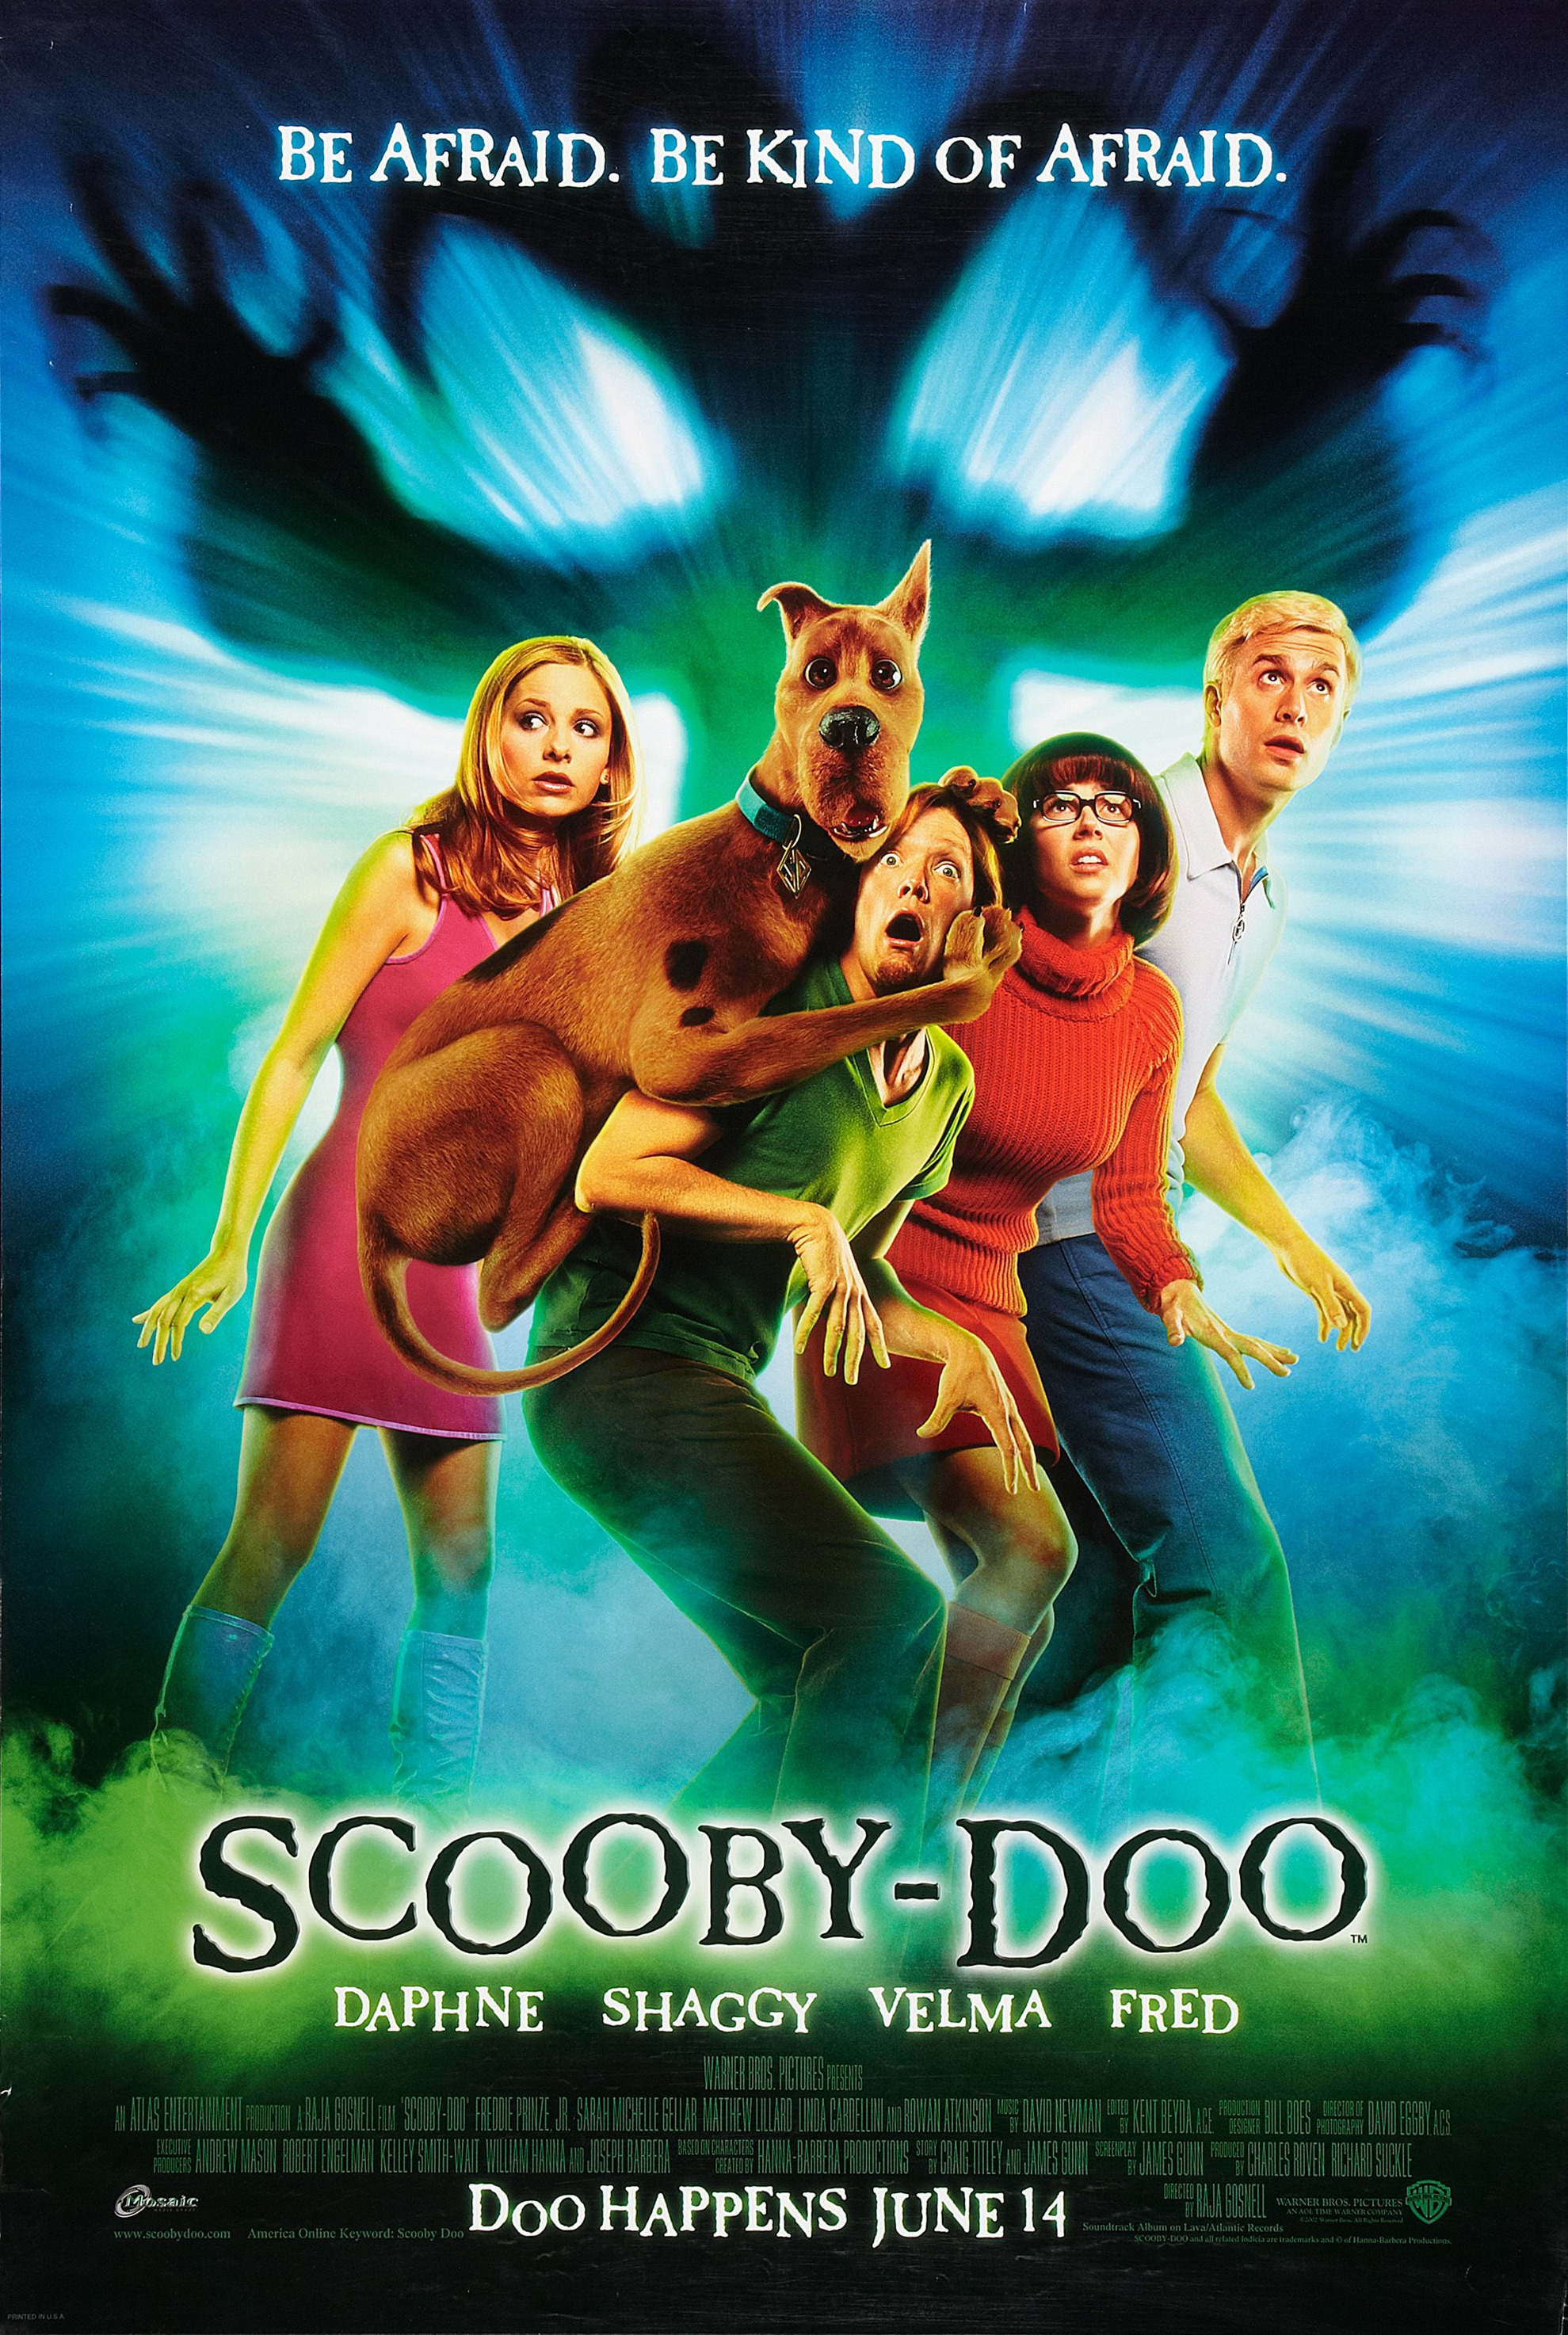 Scooby-Doo (film) | Warner Bros. Entertainment Wiki | FANDOM powered by